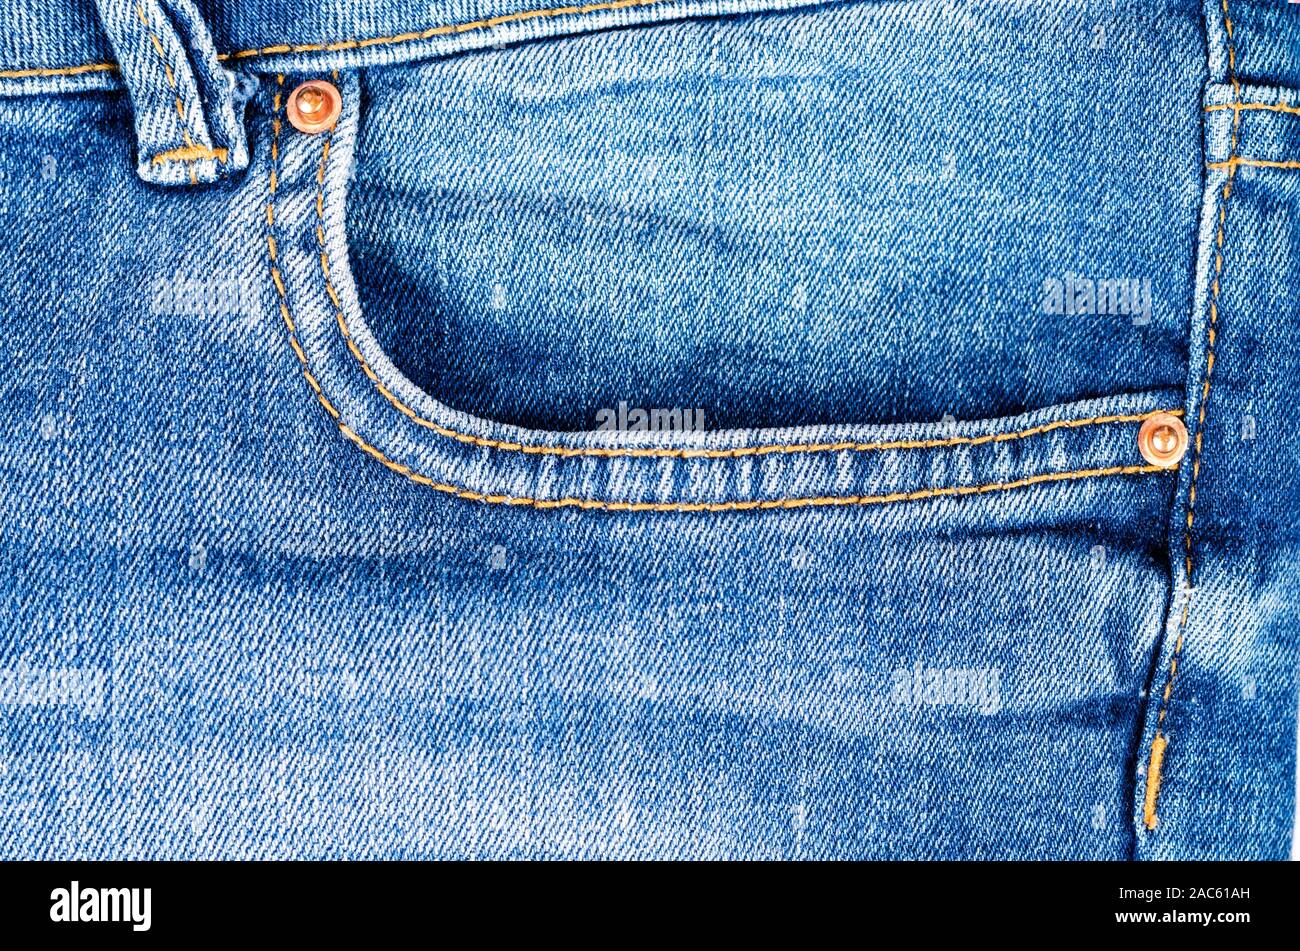 Denim blue jeans pantalones pantalón pocket detalle de textura closeup  vista superior , copyscape Fotografía de stock - Alamy